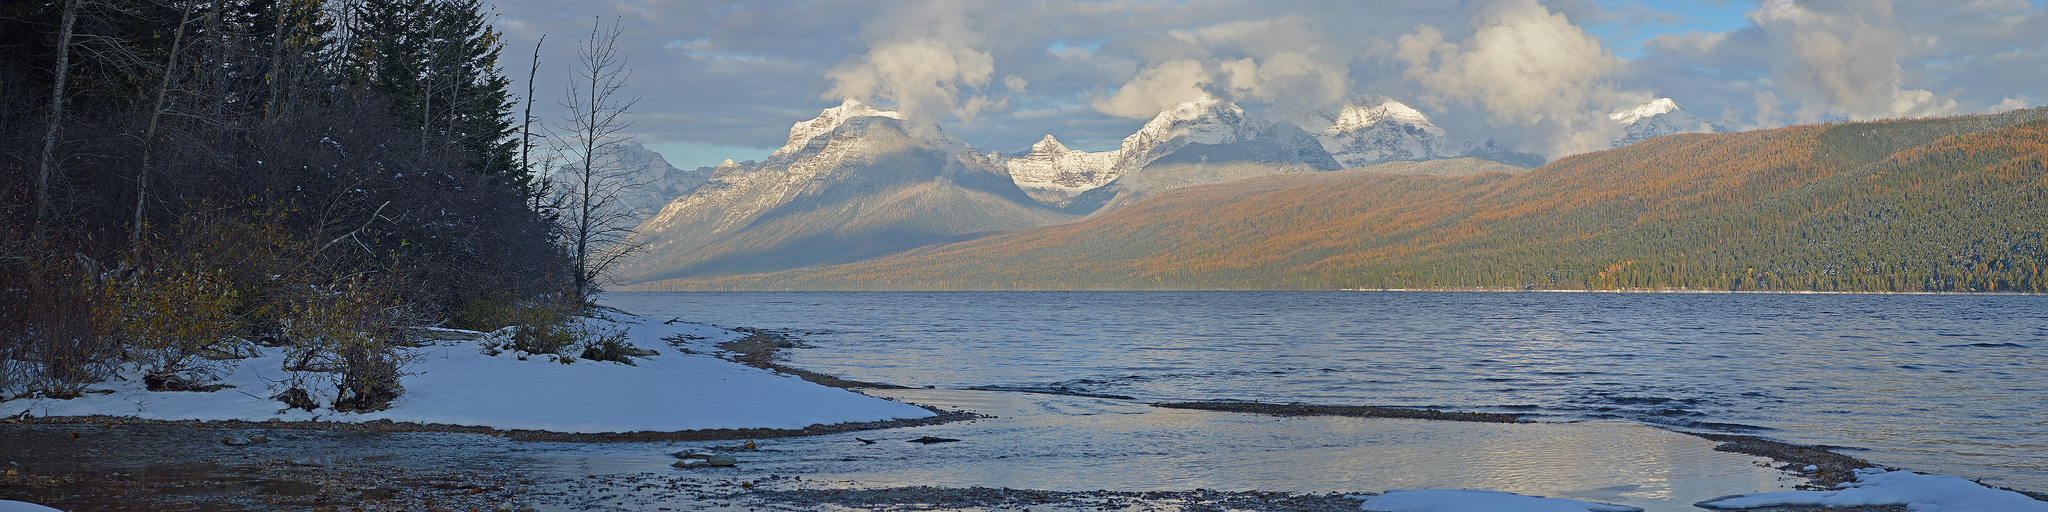 Fall in Glacier National Park. Lake McDonald from Fish Creek. NPS Photo.